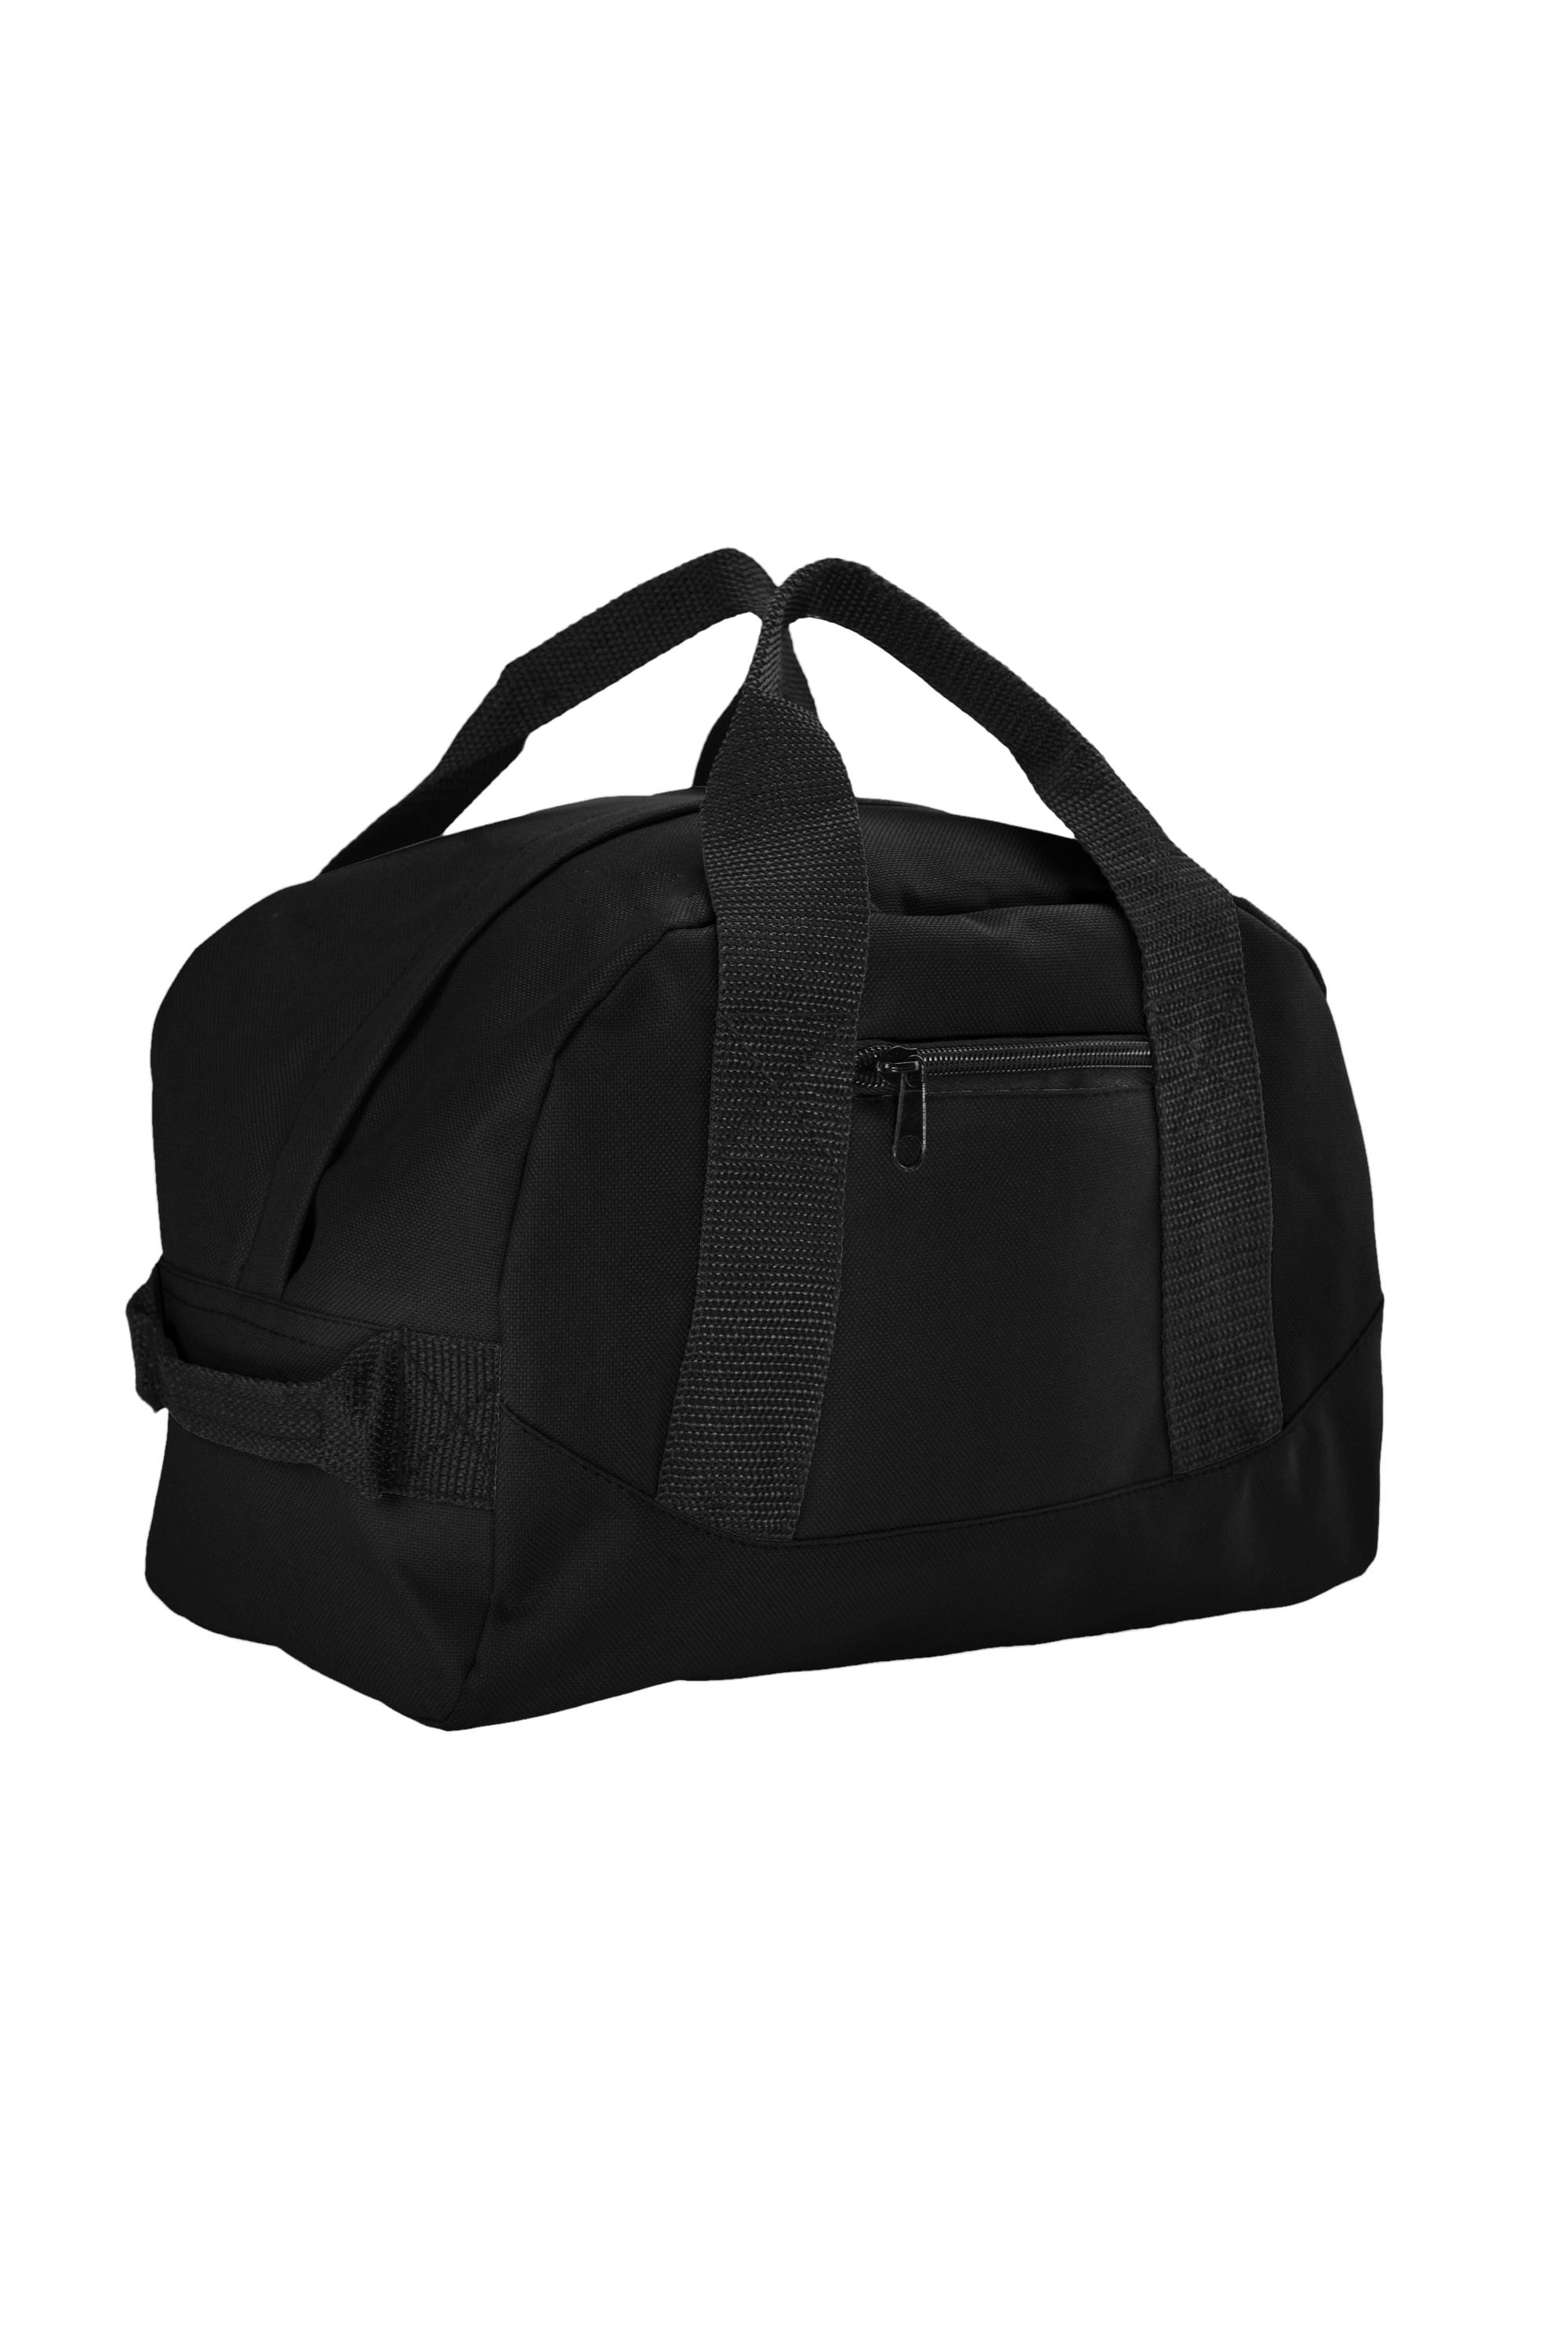 DALIX 12 Mini Duffel Bag Gym Duffle in Black